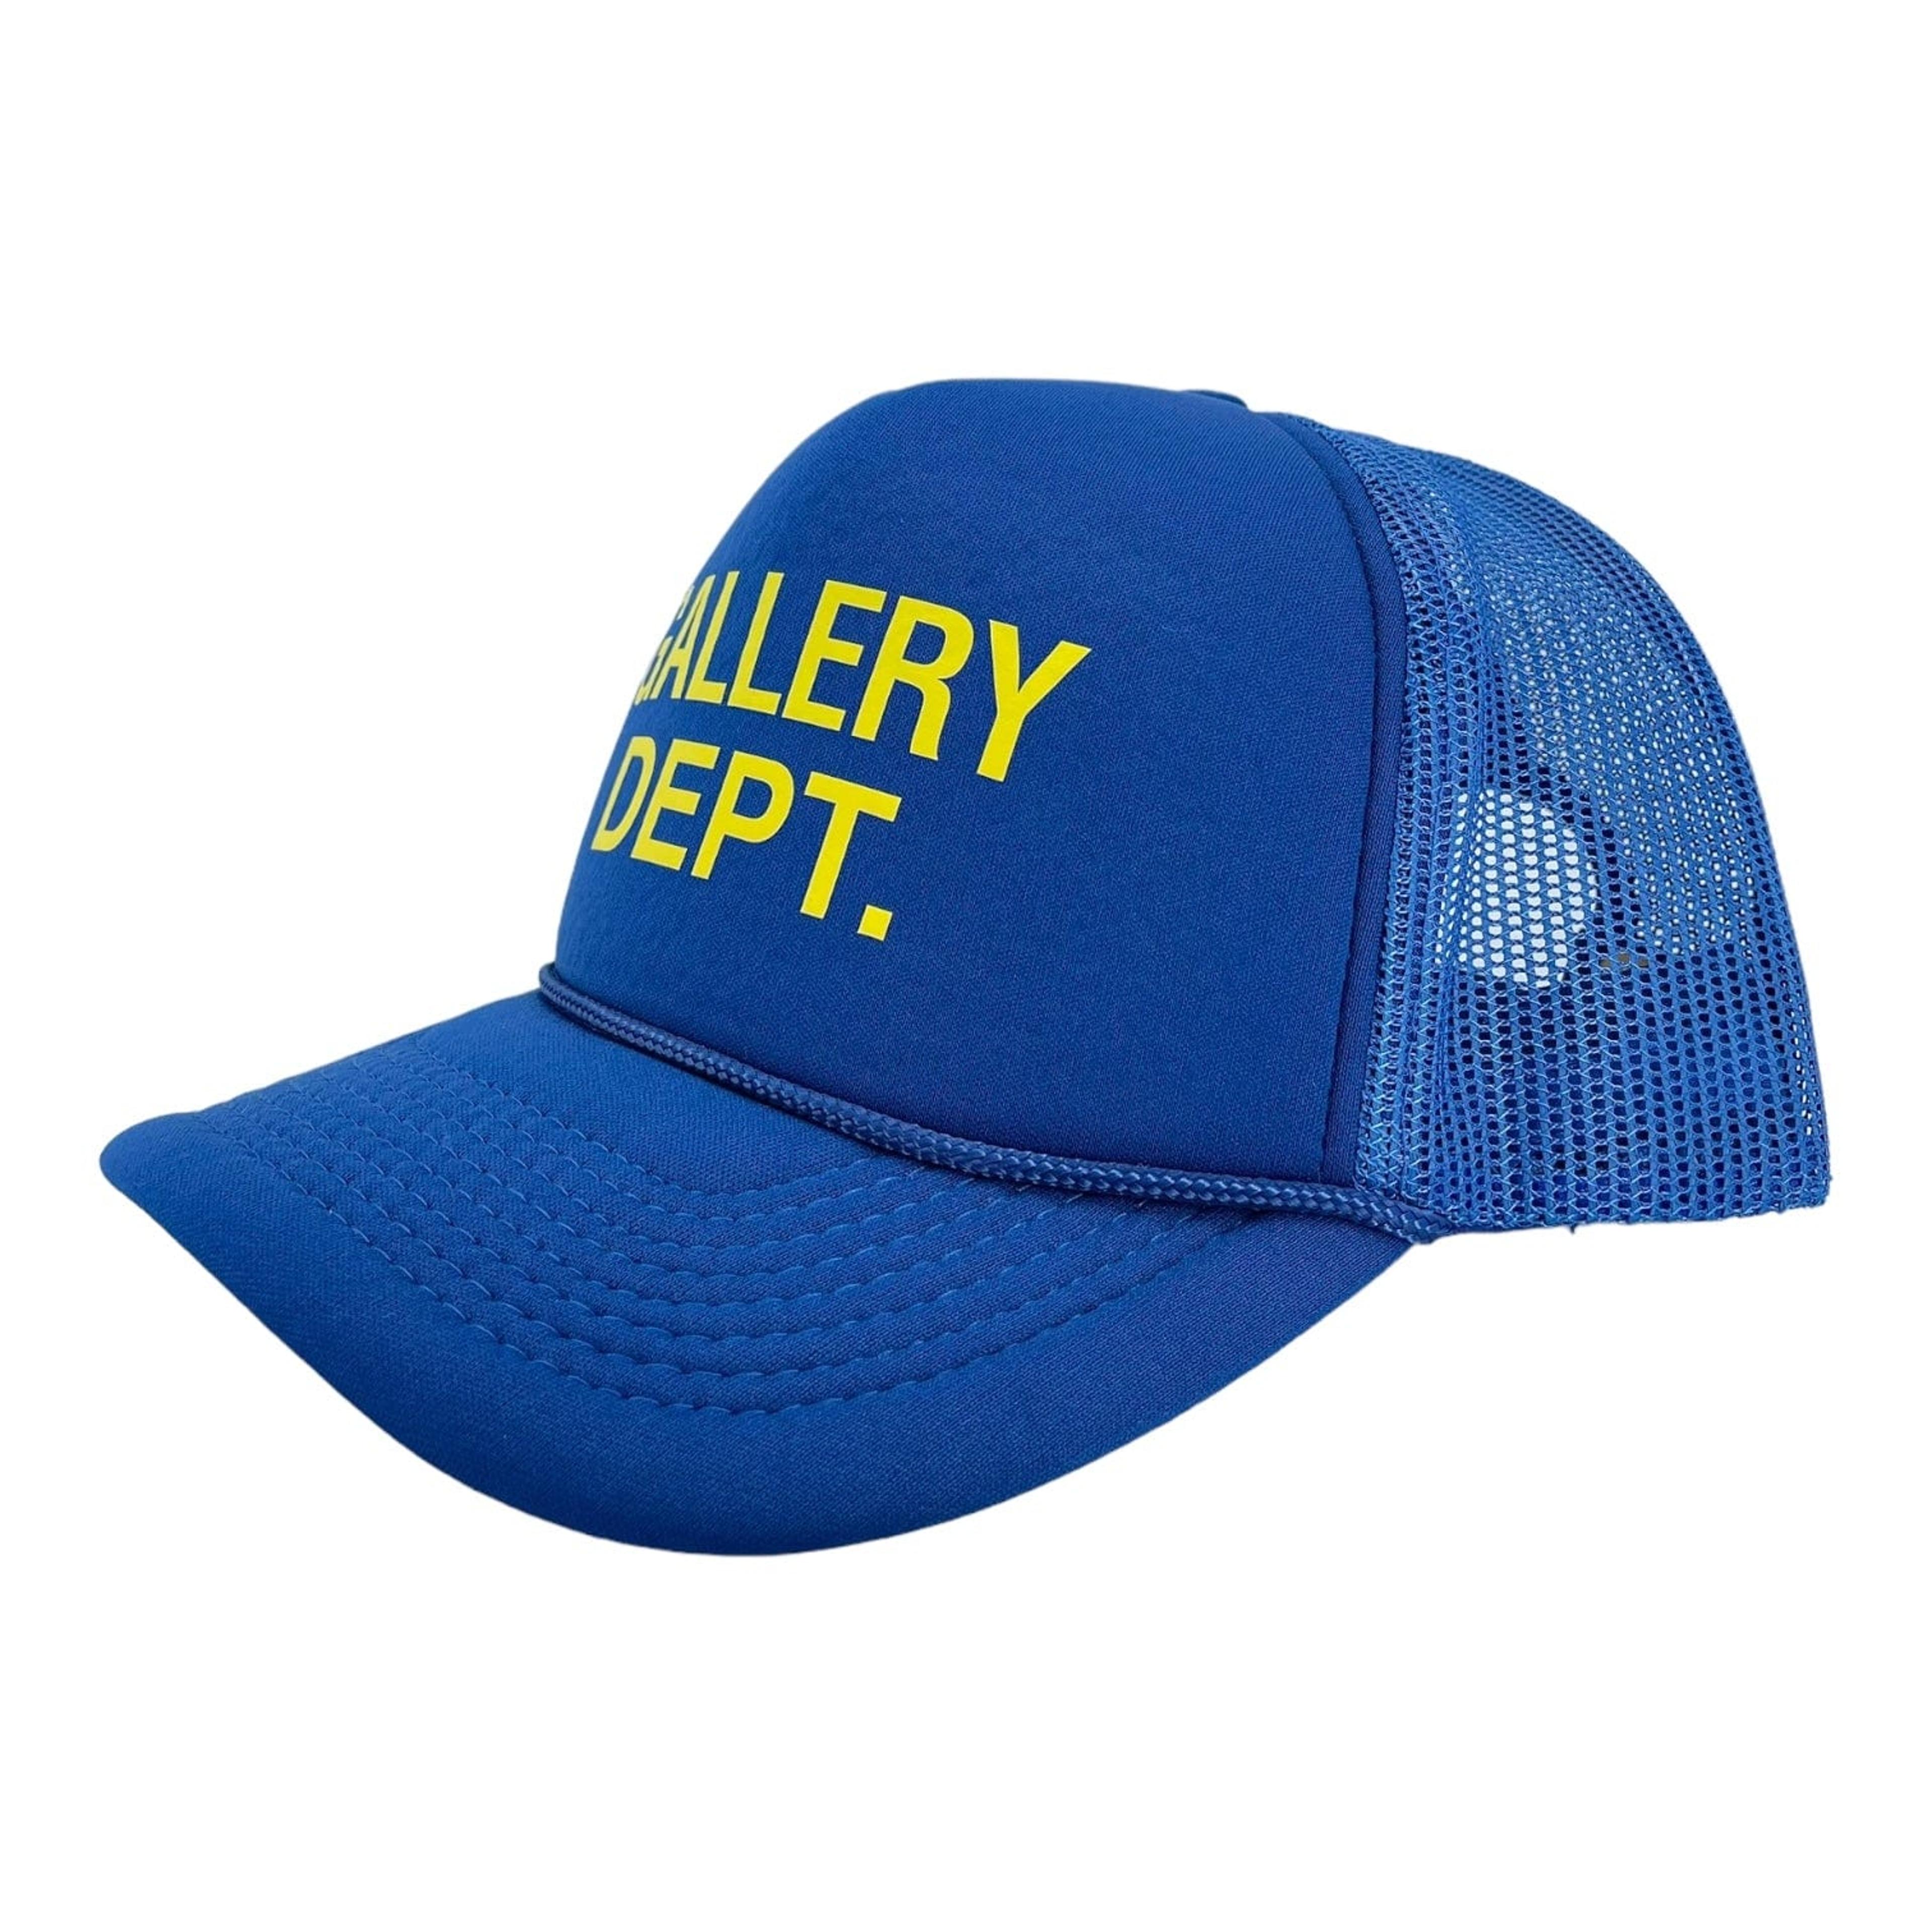 Alternate View 4 of Gallery Department Logo Trucker Hat Blue Yellow